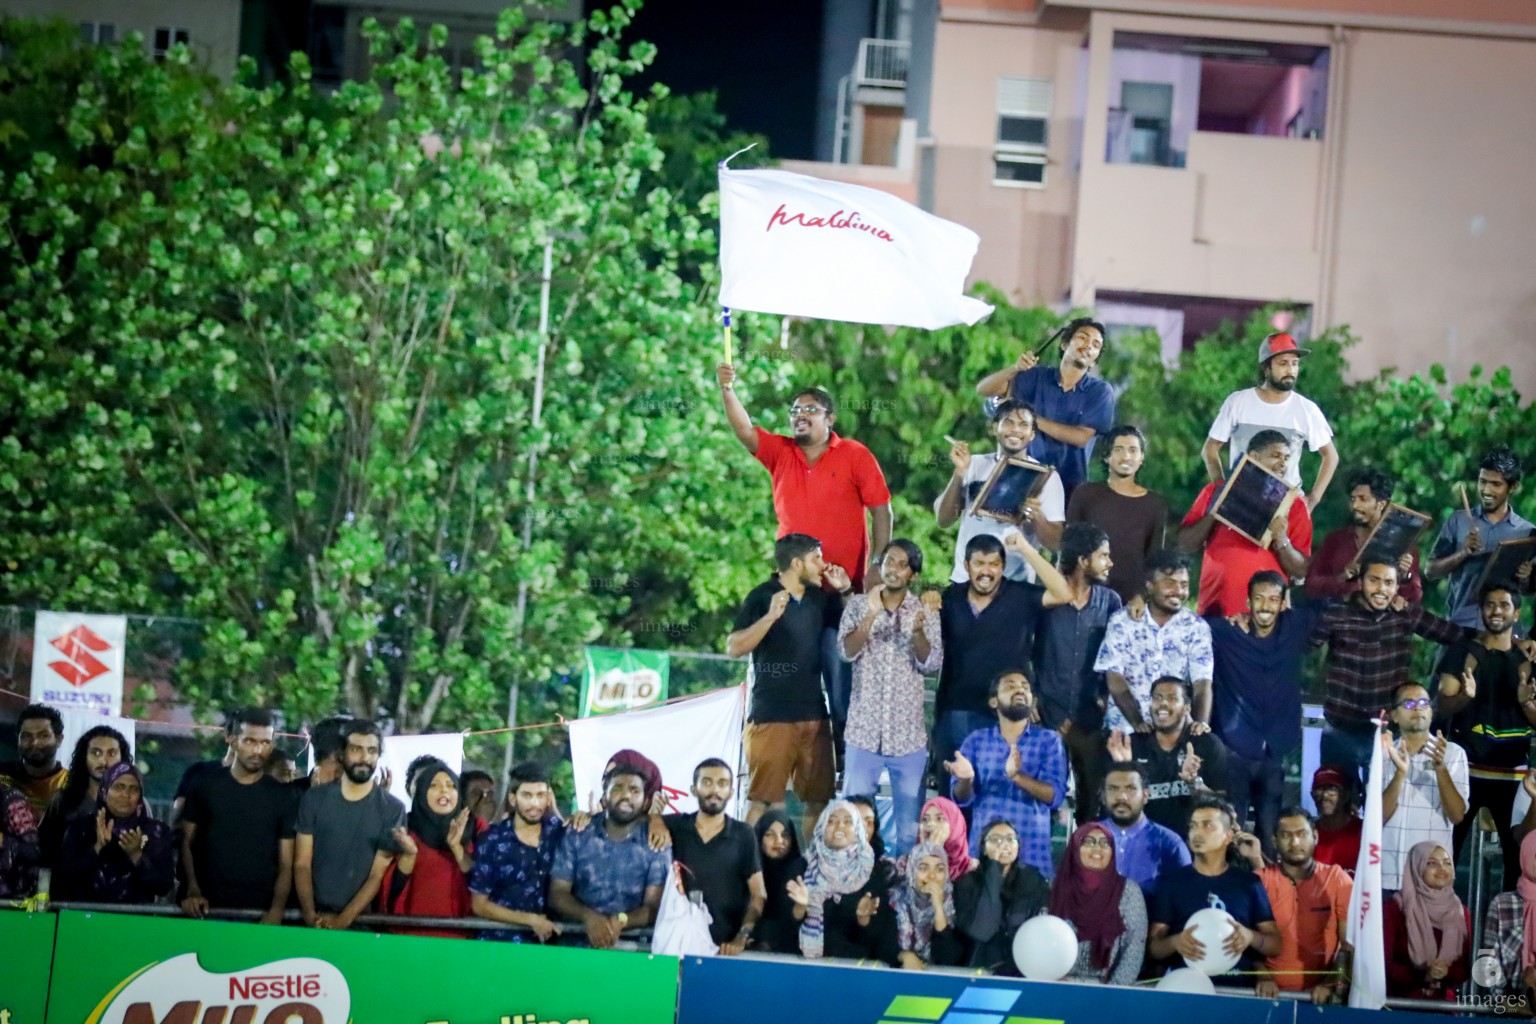 Club Maldives 2018 / Semi Final (Maldivian vs MPL)